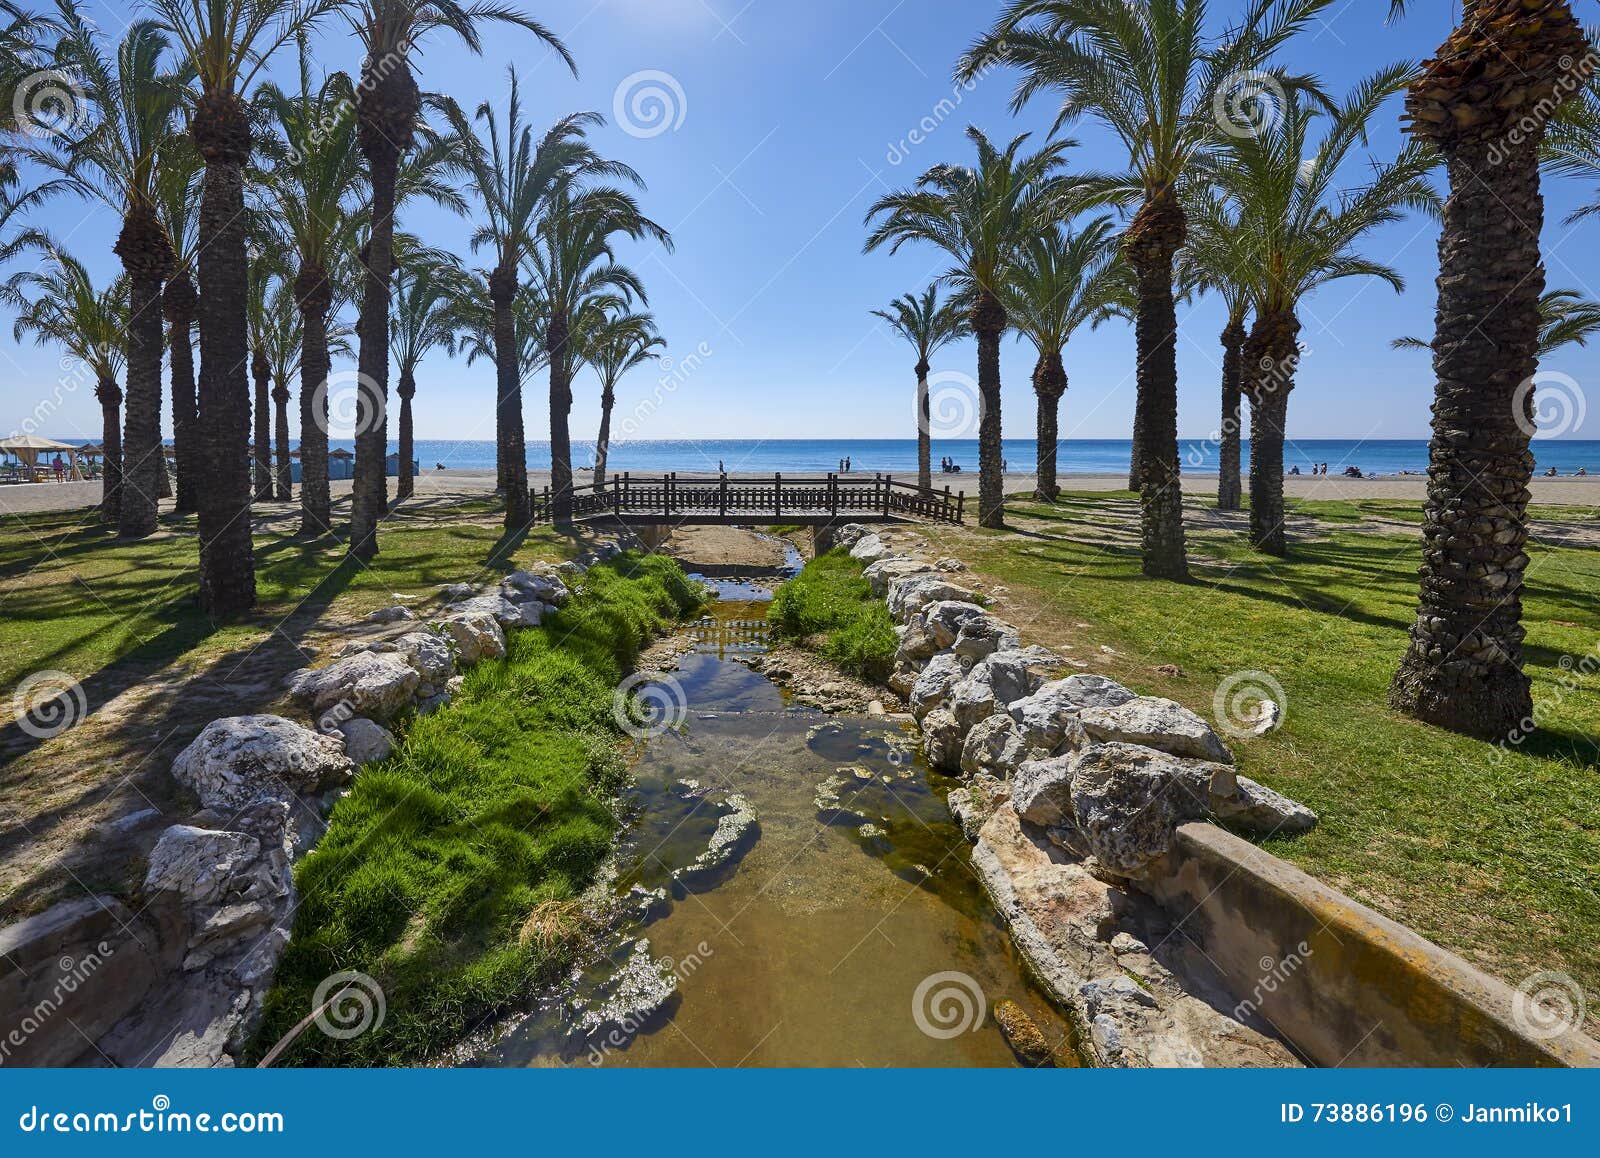 view of the beaches, torremolinos, costa del sol